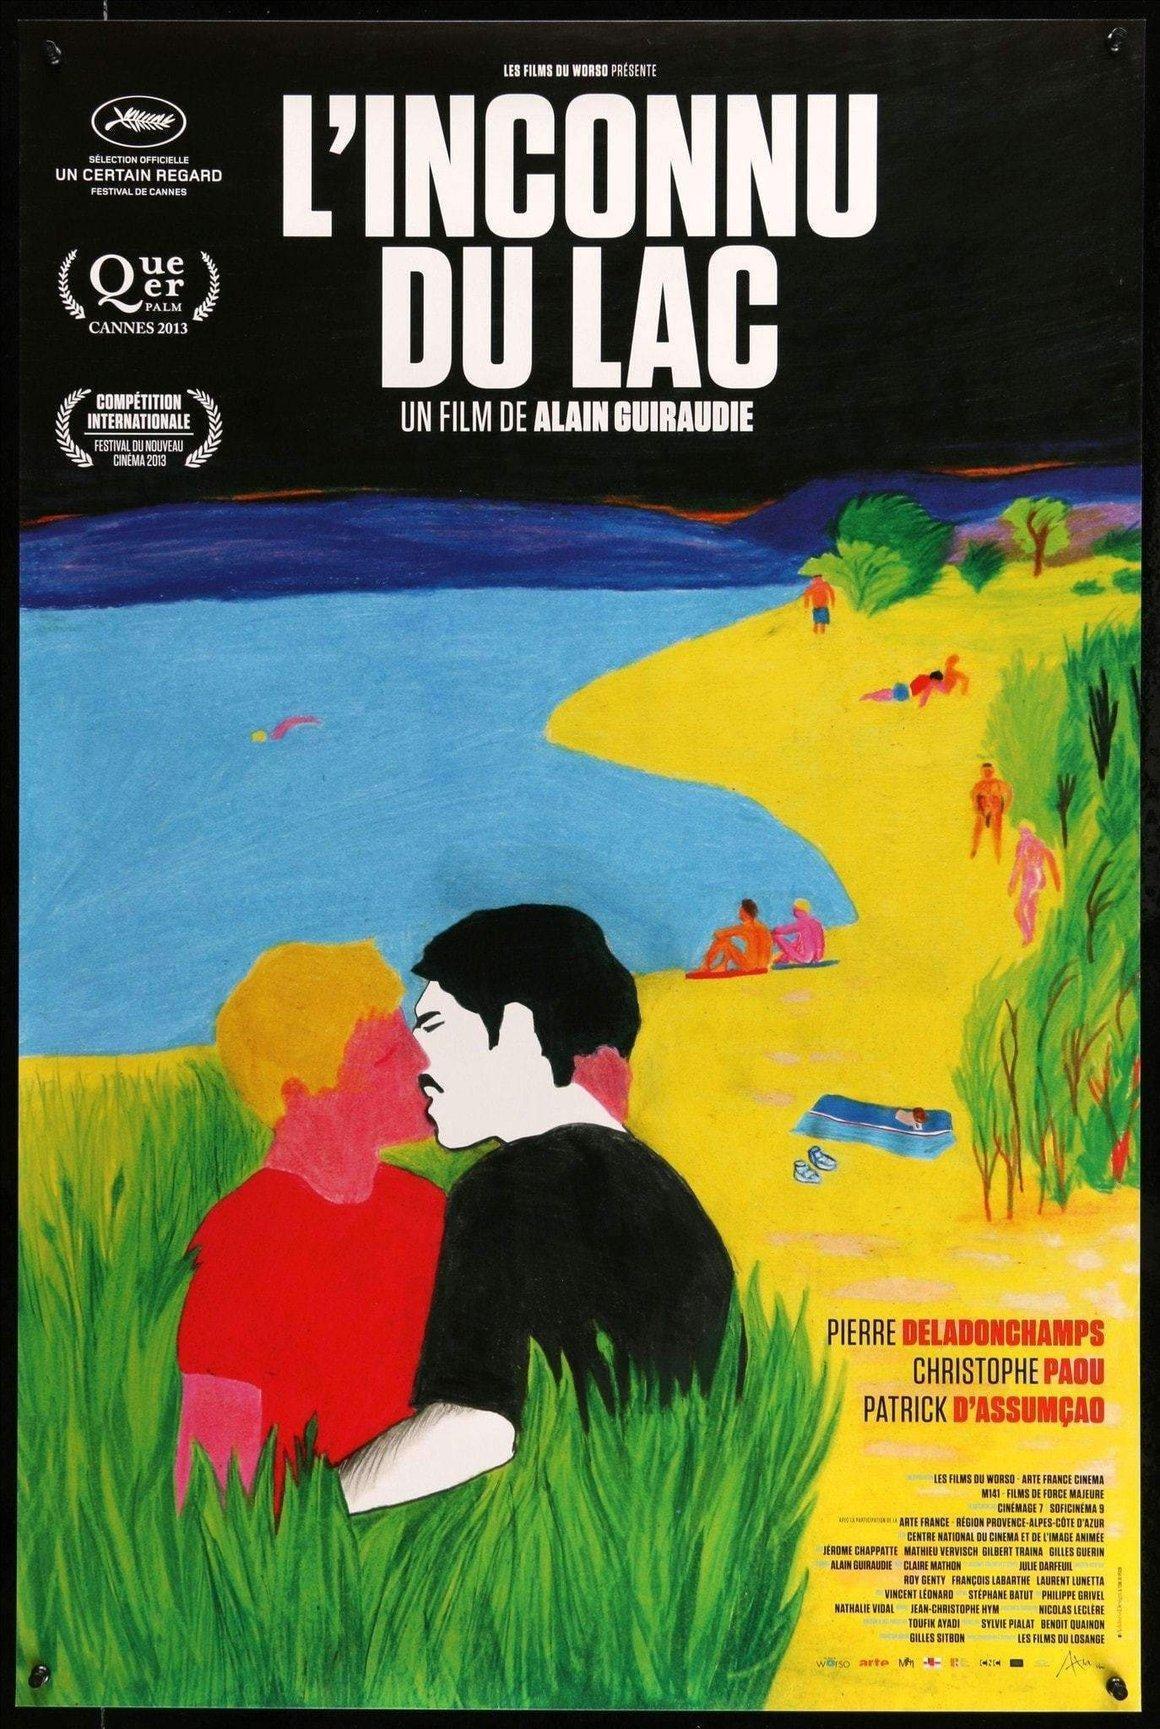 Stranger by the Lake (2013) original movie poster for sale at Original Film Art